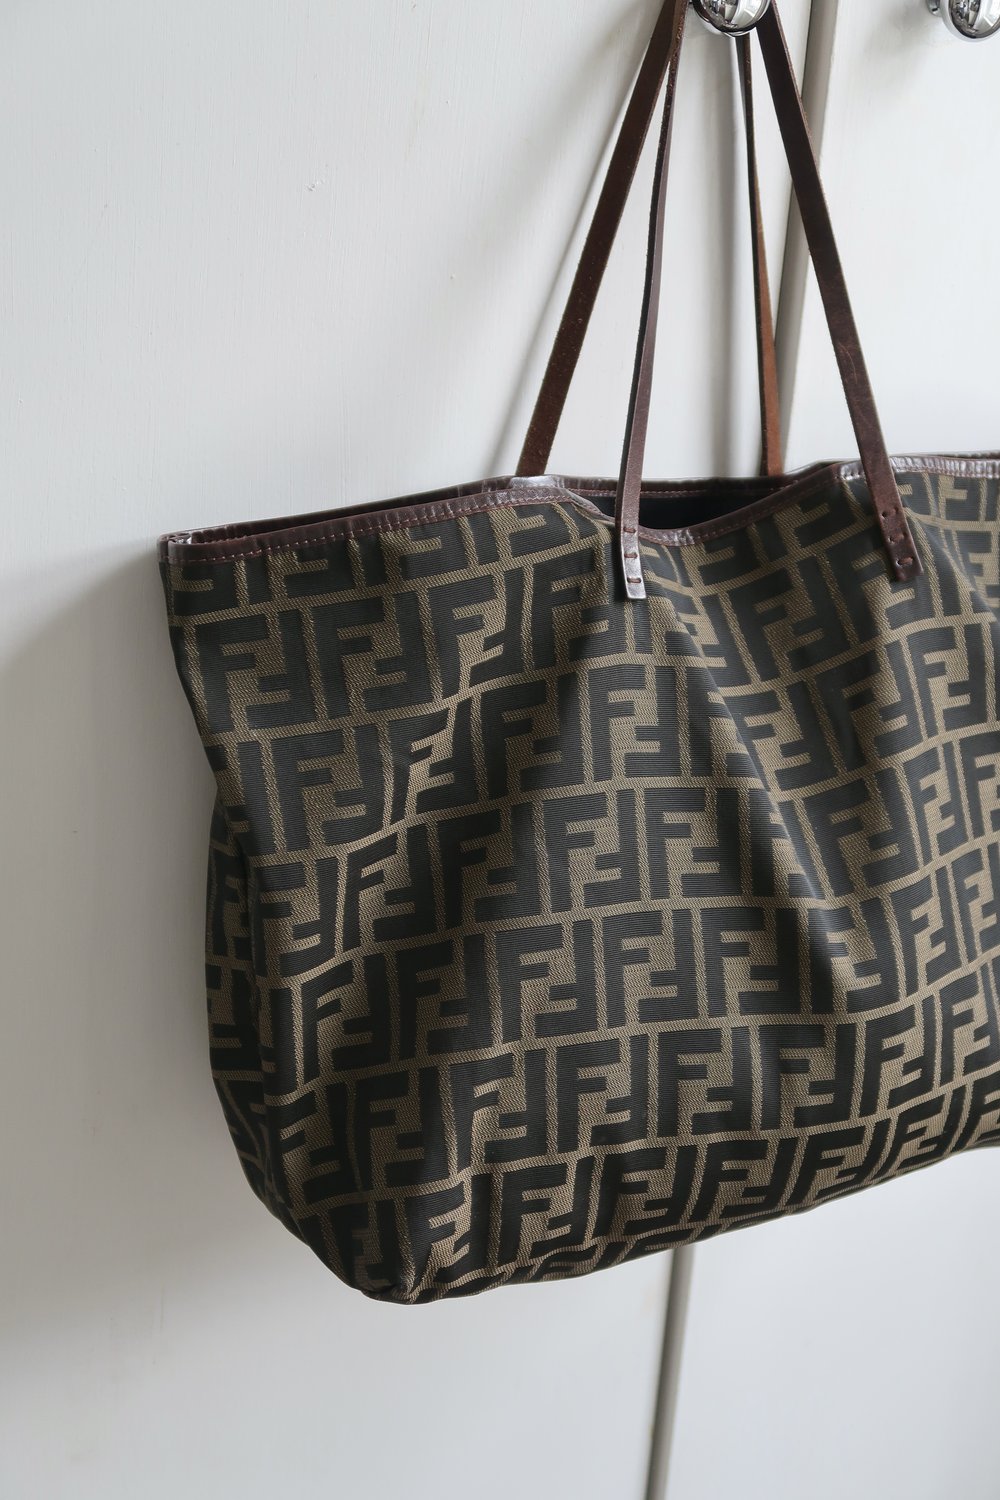 Fendi Monogram Fabric Tote Bag — Blaise Ruby Loves